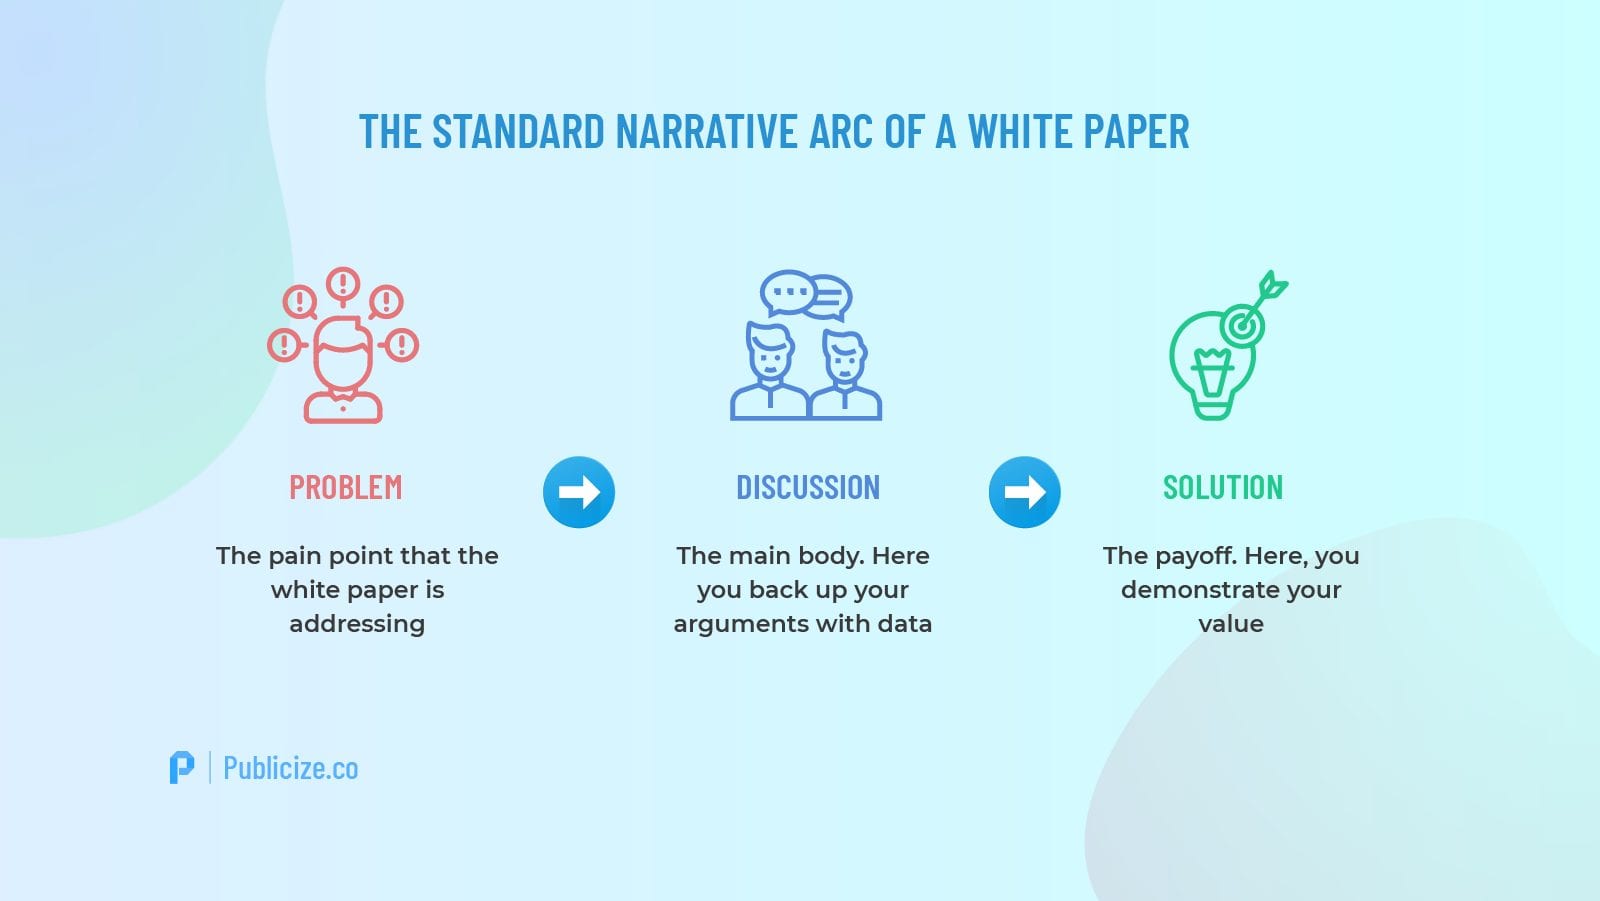 White paper narrative arc infographic